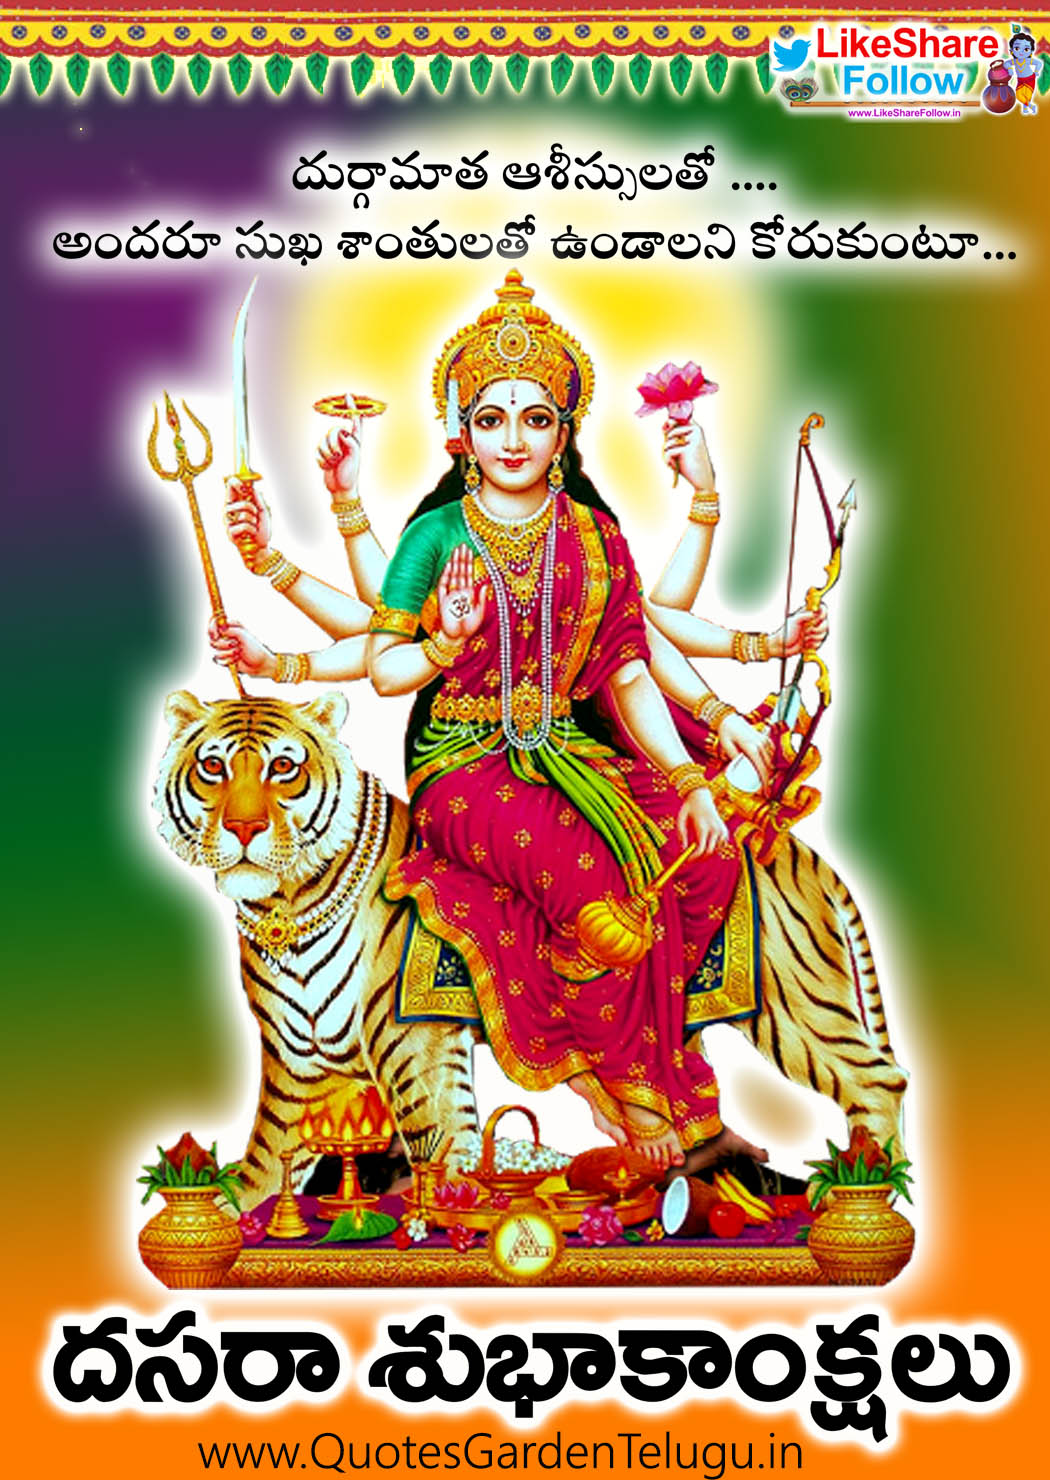 Dasara Greetings 2018 Wishes in Telugu | QUOTES GARDEN TELUGU ...